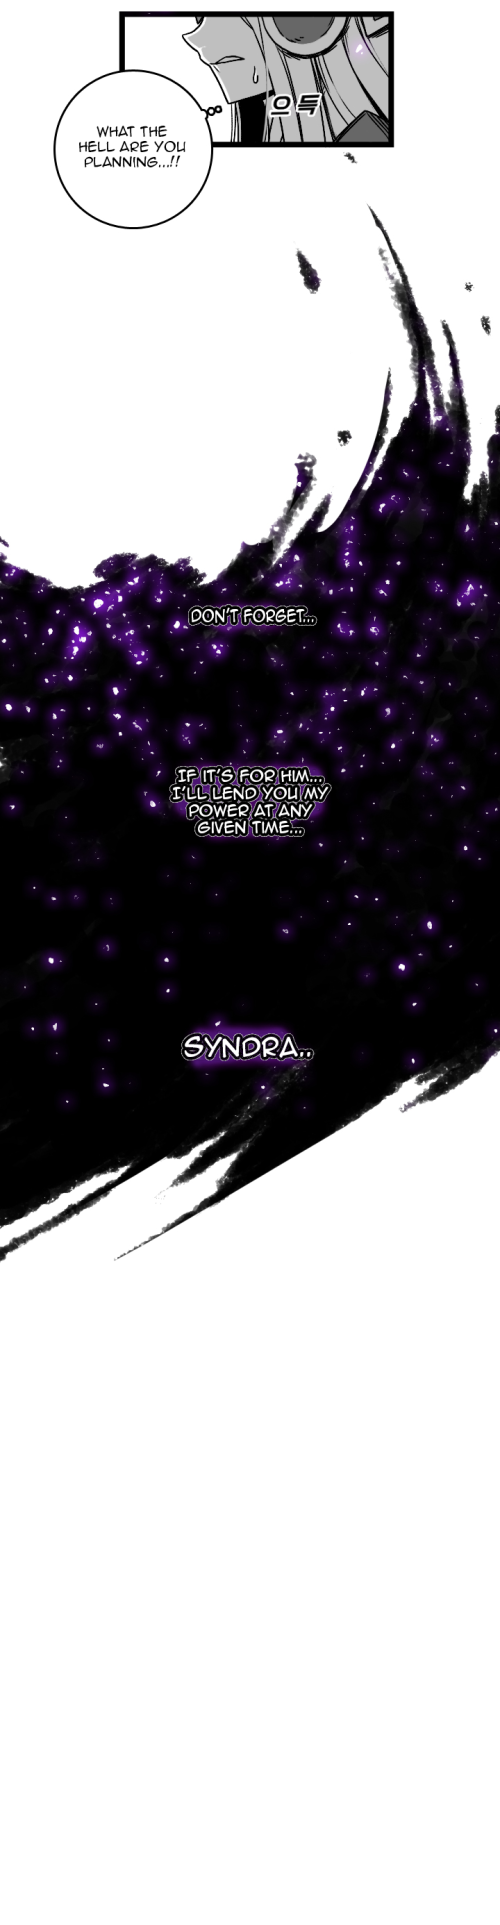 Syndra - ゼッド 経常 生活 季節 3 部分 17